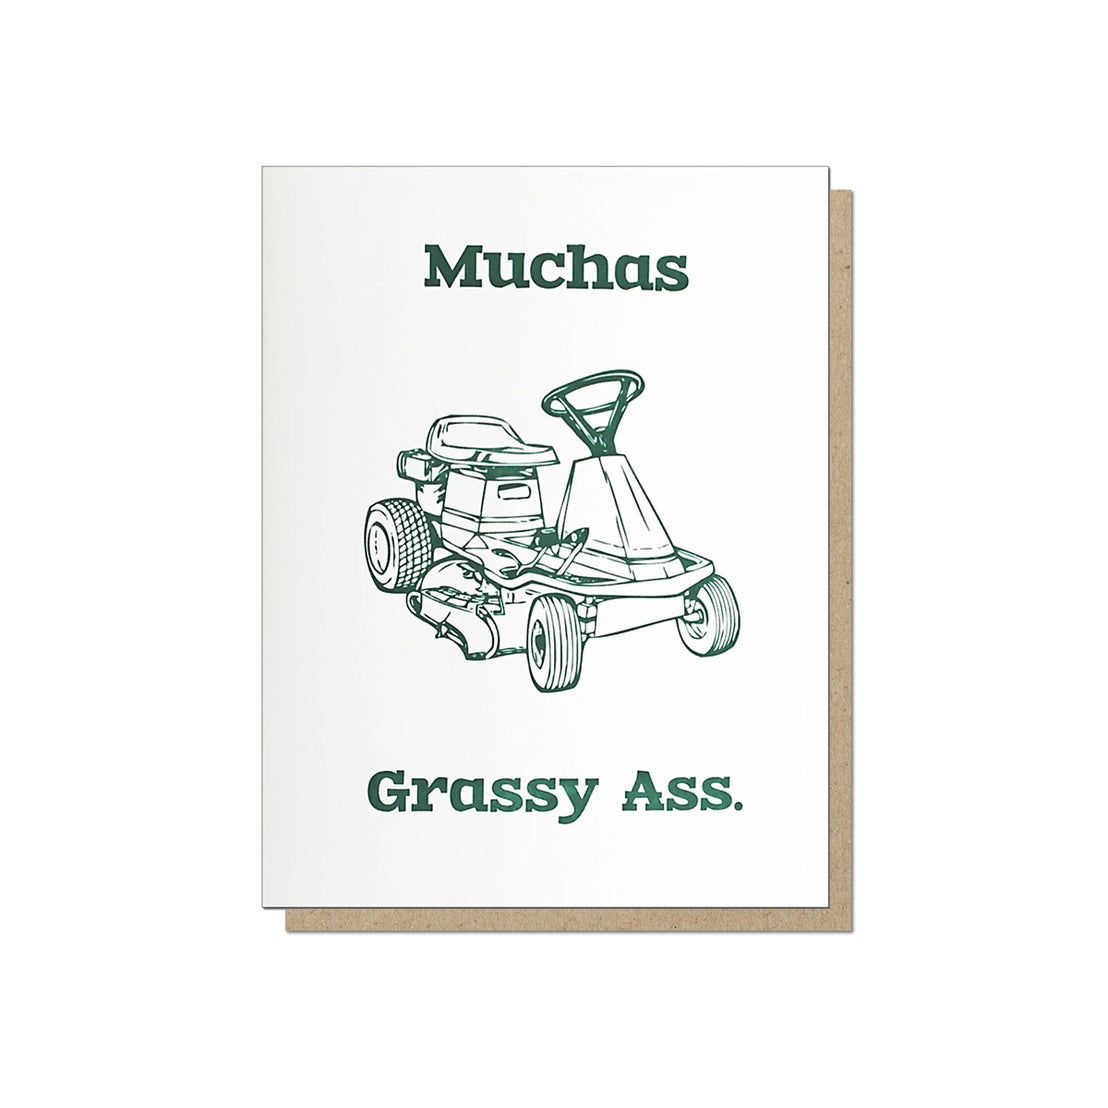 Muchas Grassy Ass, Guttersnipe